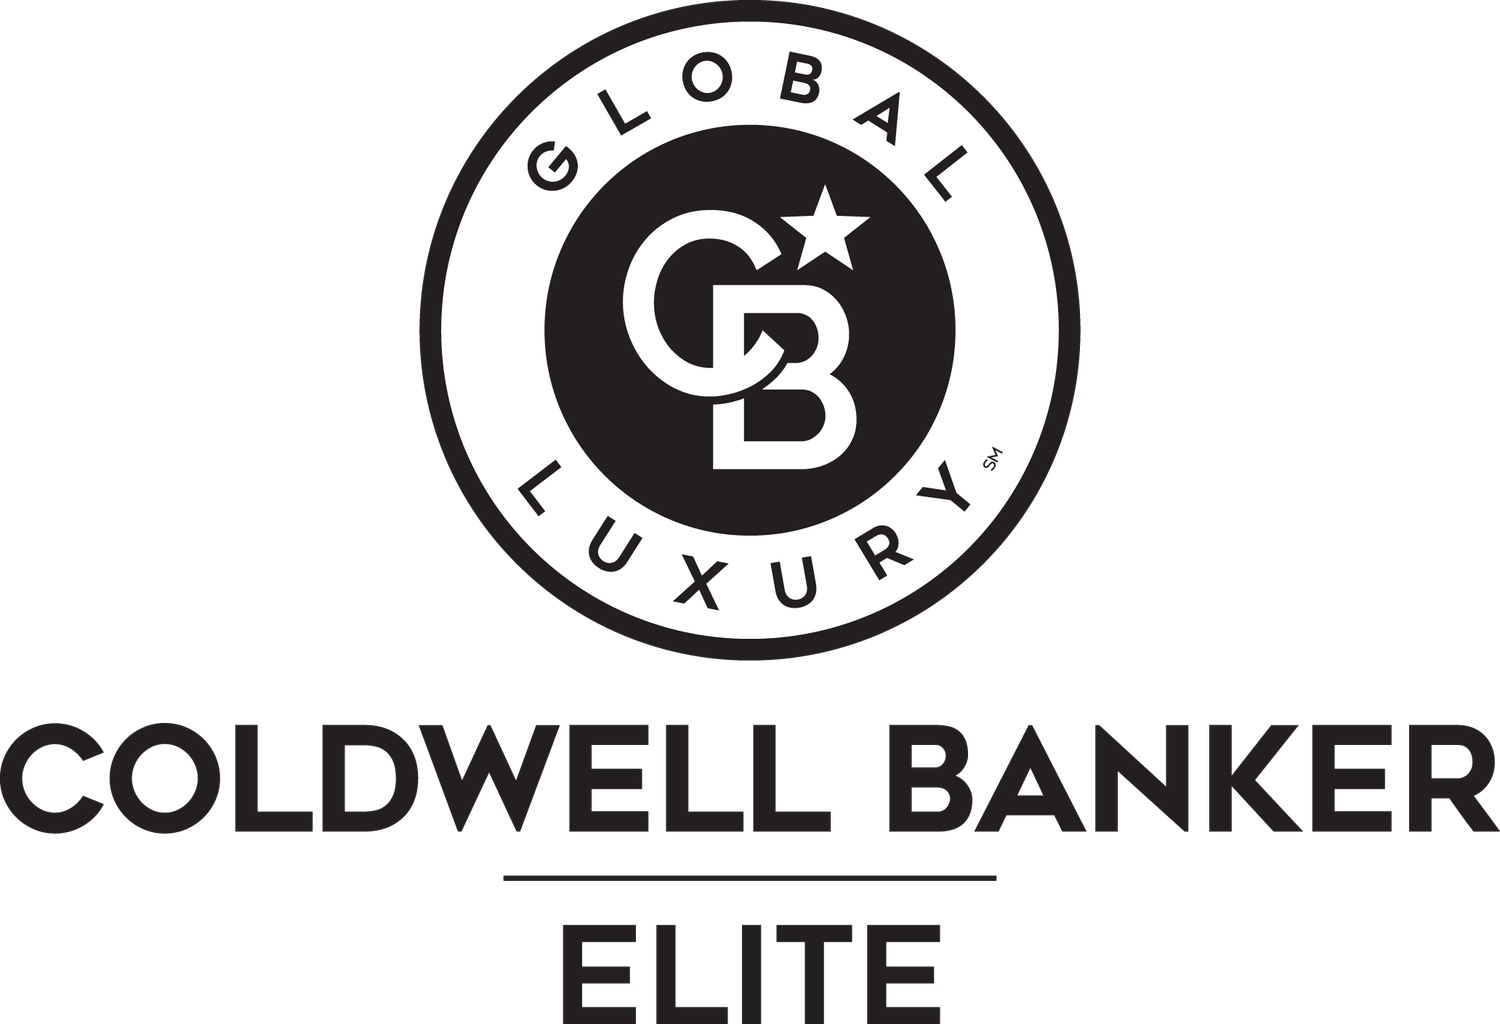 Give Back Team of Coldwell Banker Elite